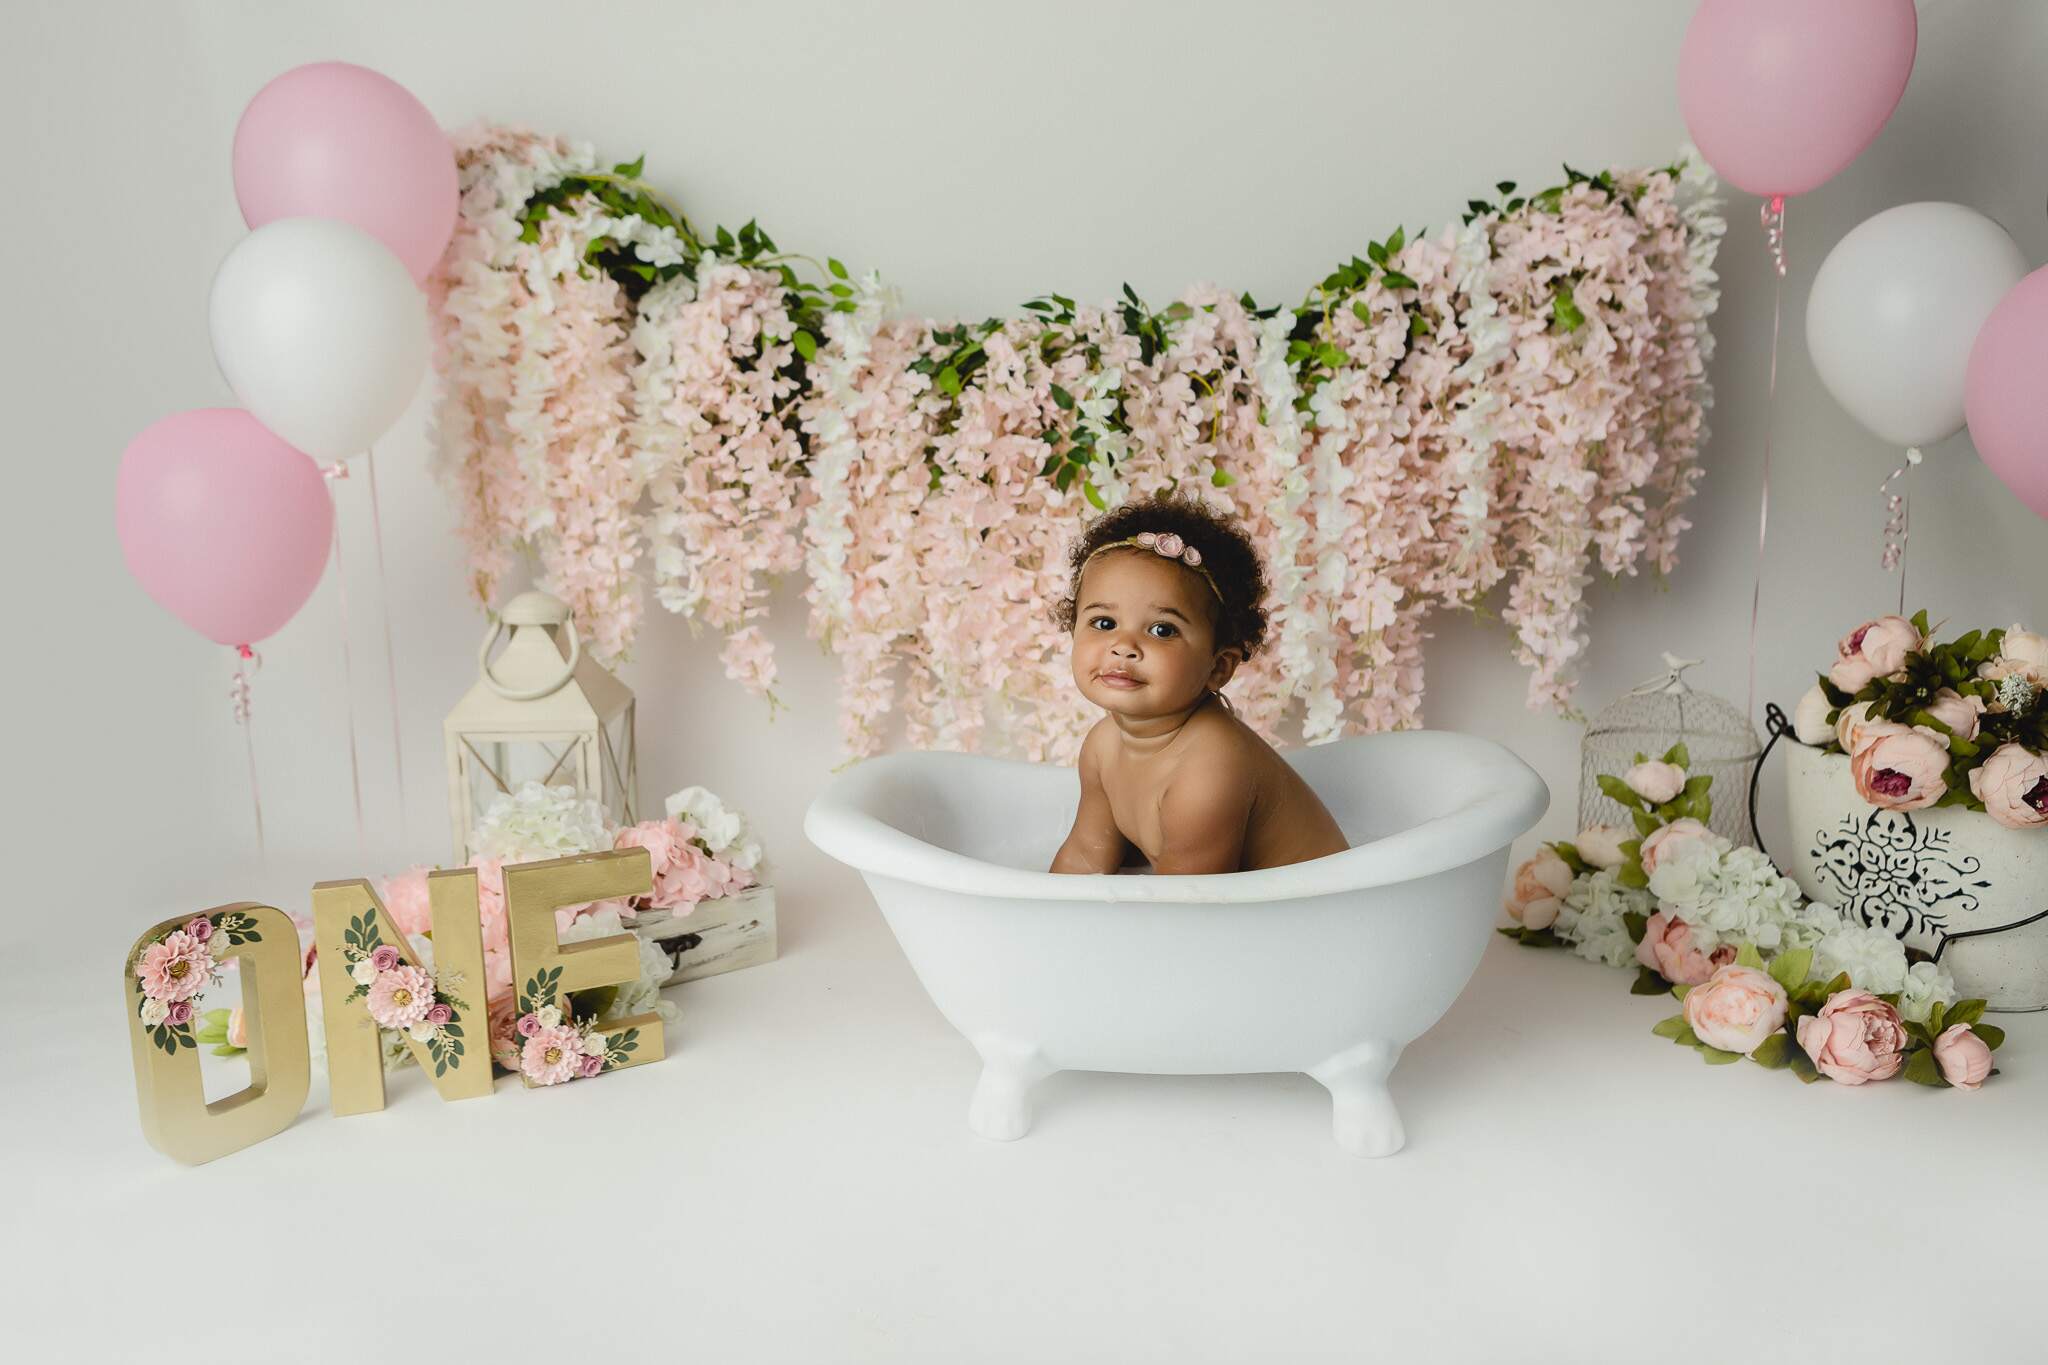 Bath time floral milestone cake smash photoshoot with baby girl